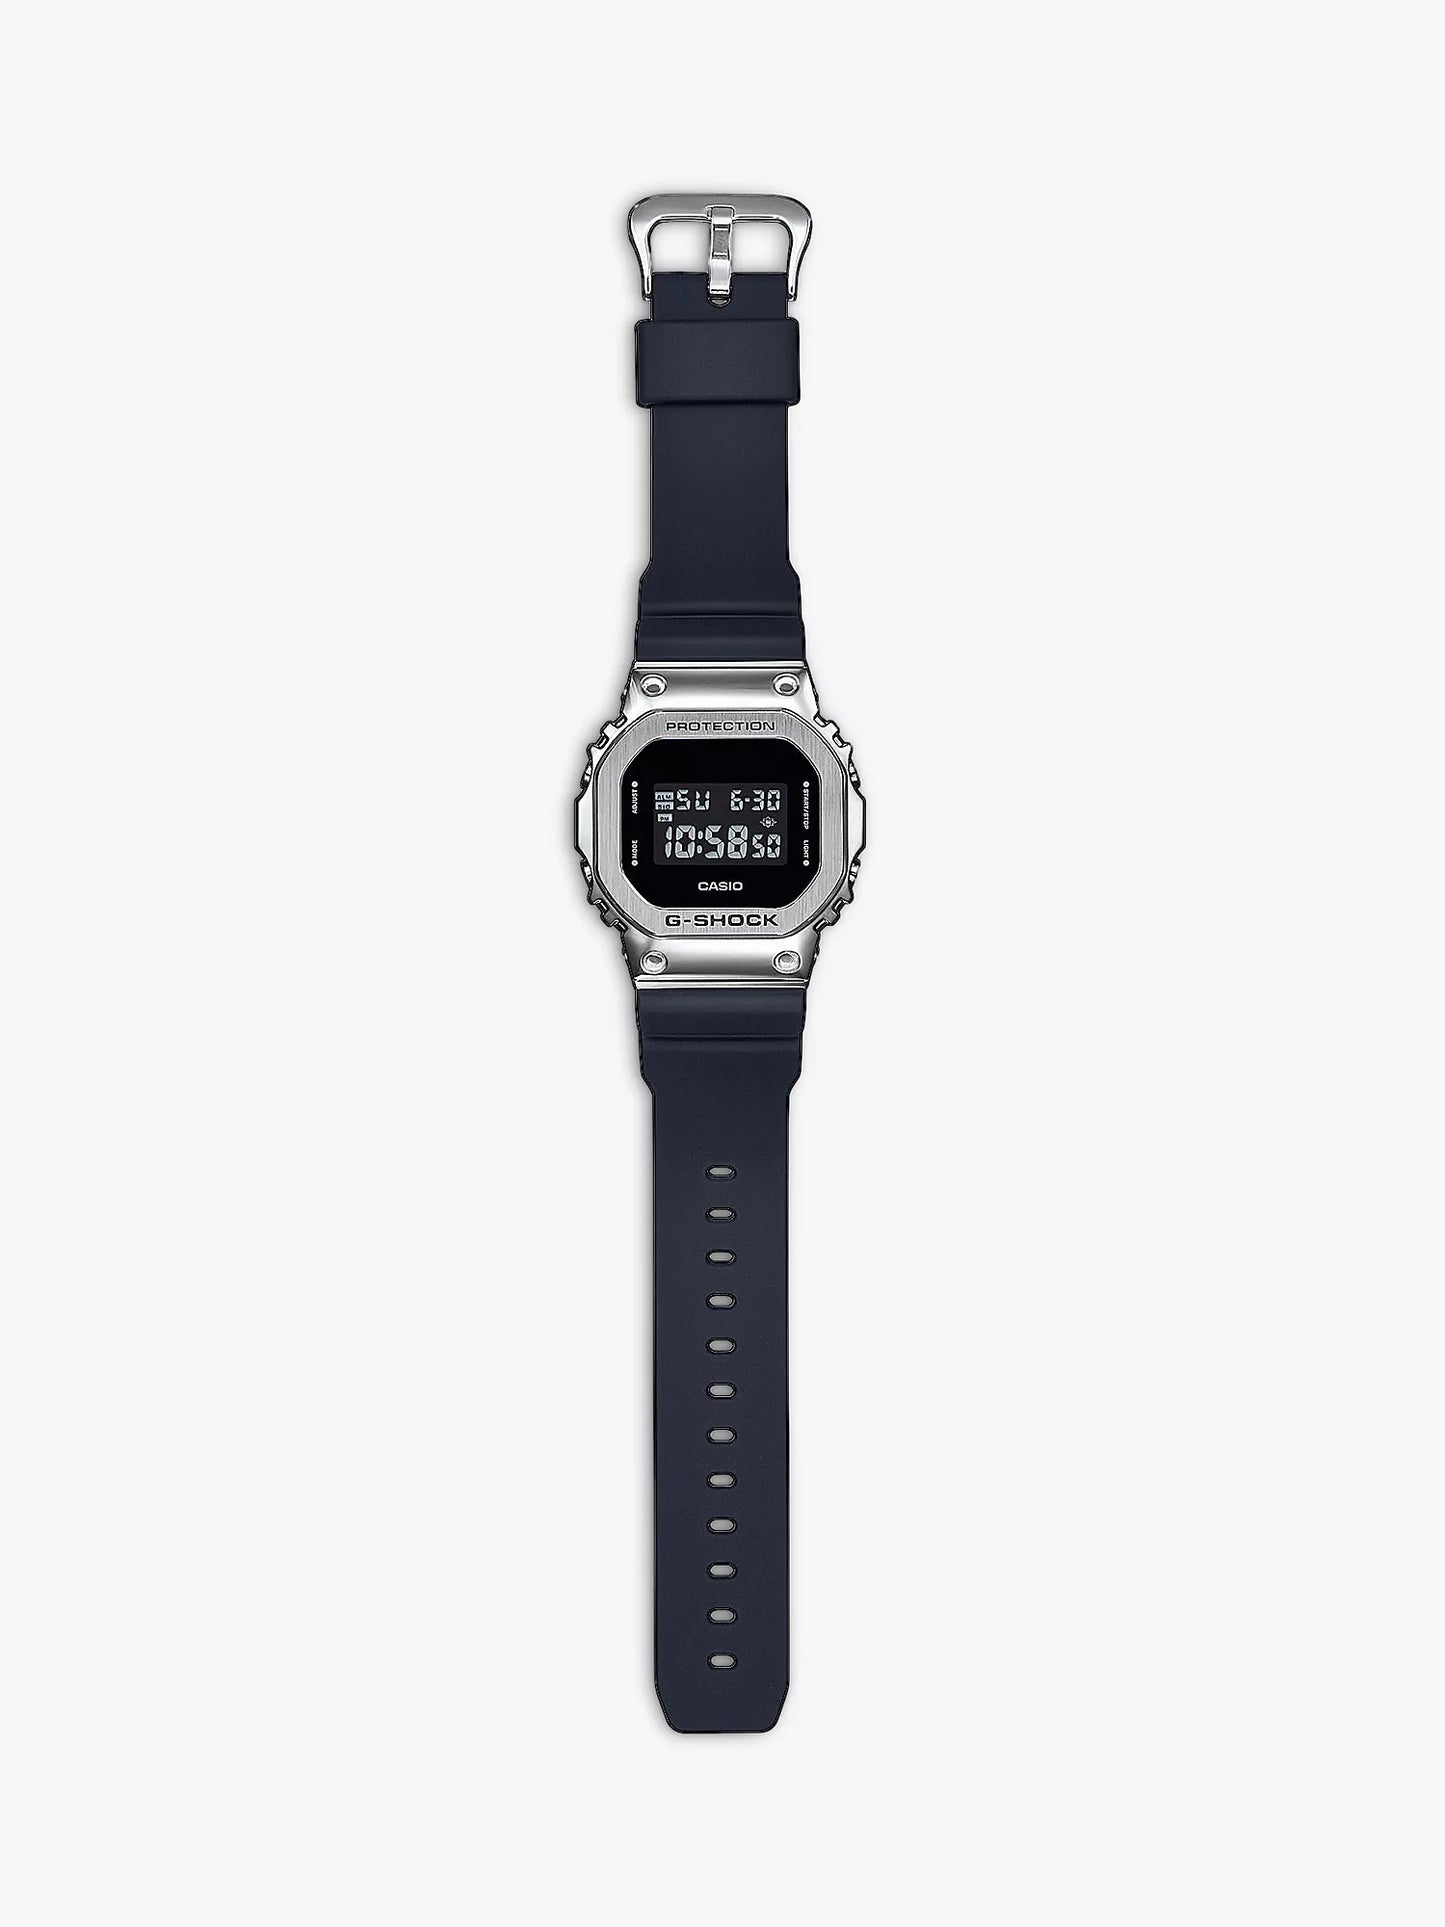 Casio G-Shock GM-5600U-1ER Full Metal (42.8mm) Digital Dial / Black Resin Strap Men's Watch